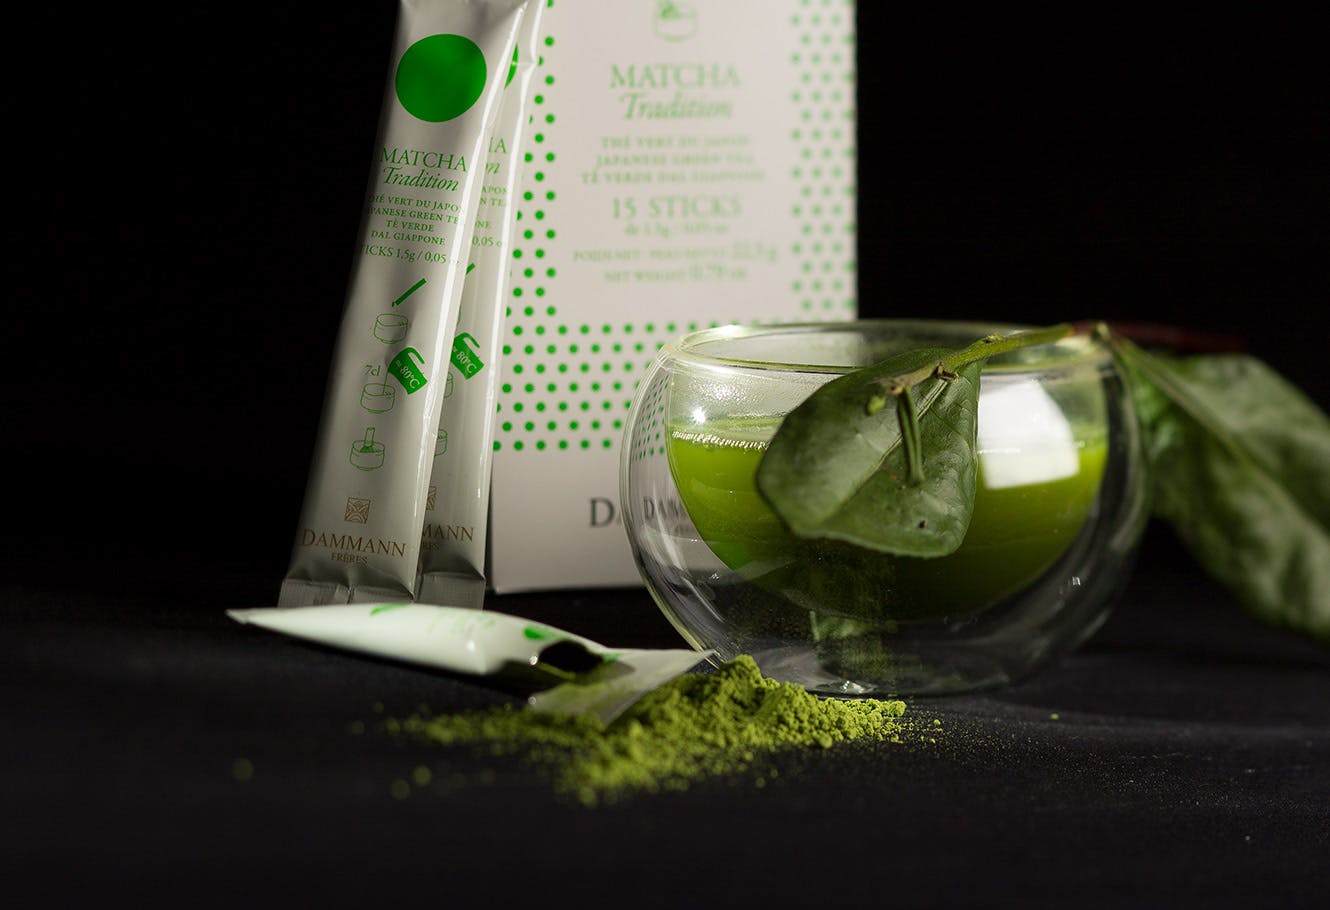 Box of matcha sticks DAMMANN Frères, green matcha tea liqueur and matcha powder.